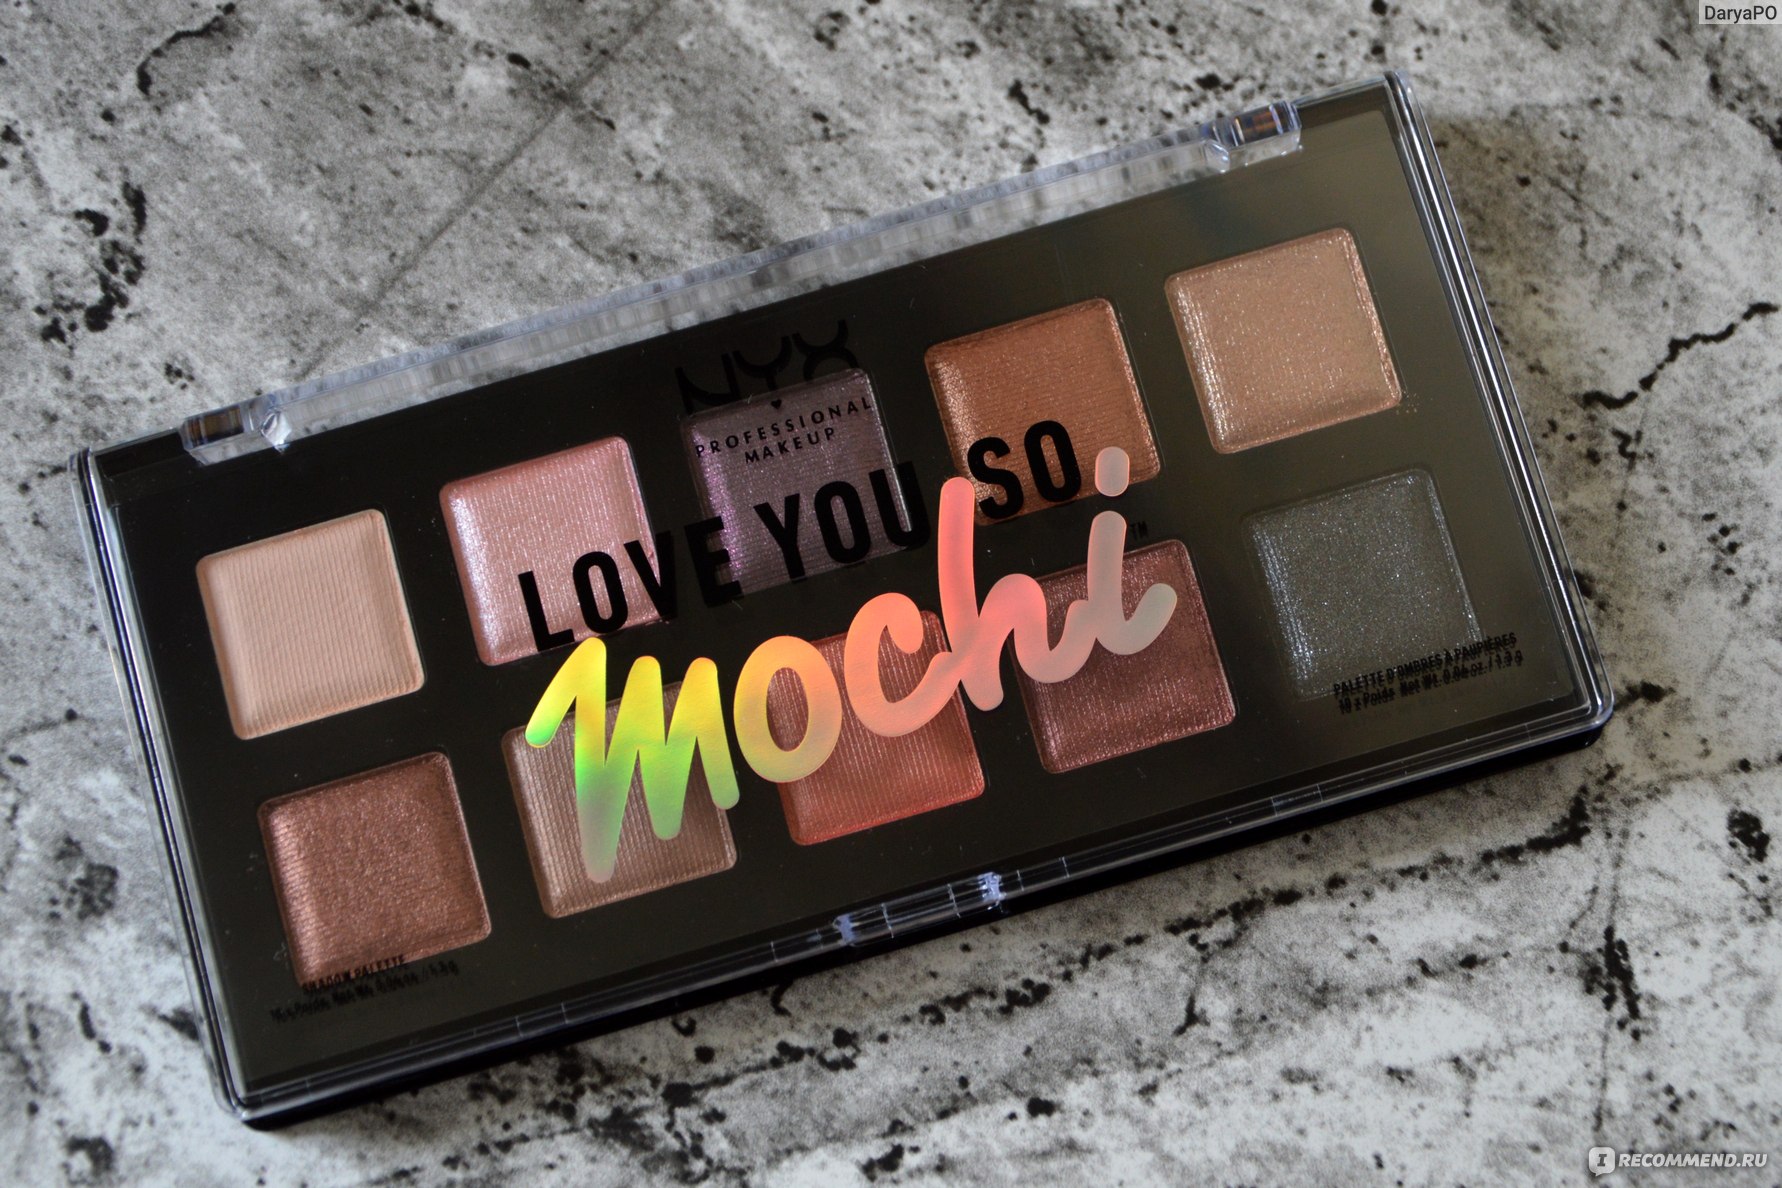 Review: nyx - love you so mochi eyeshadow palette (sleek & chic)